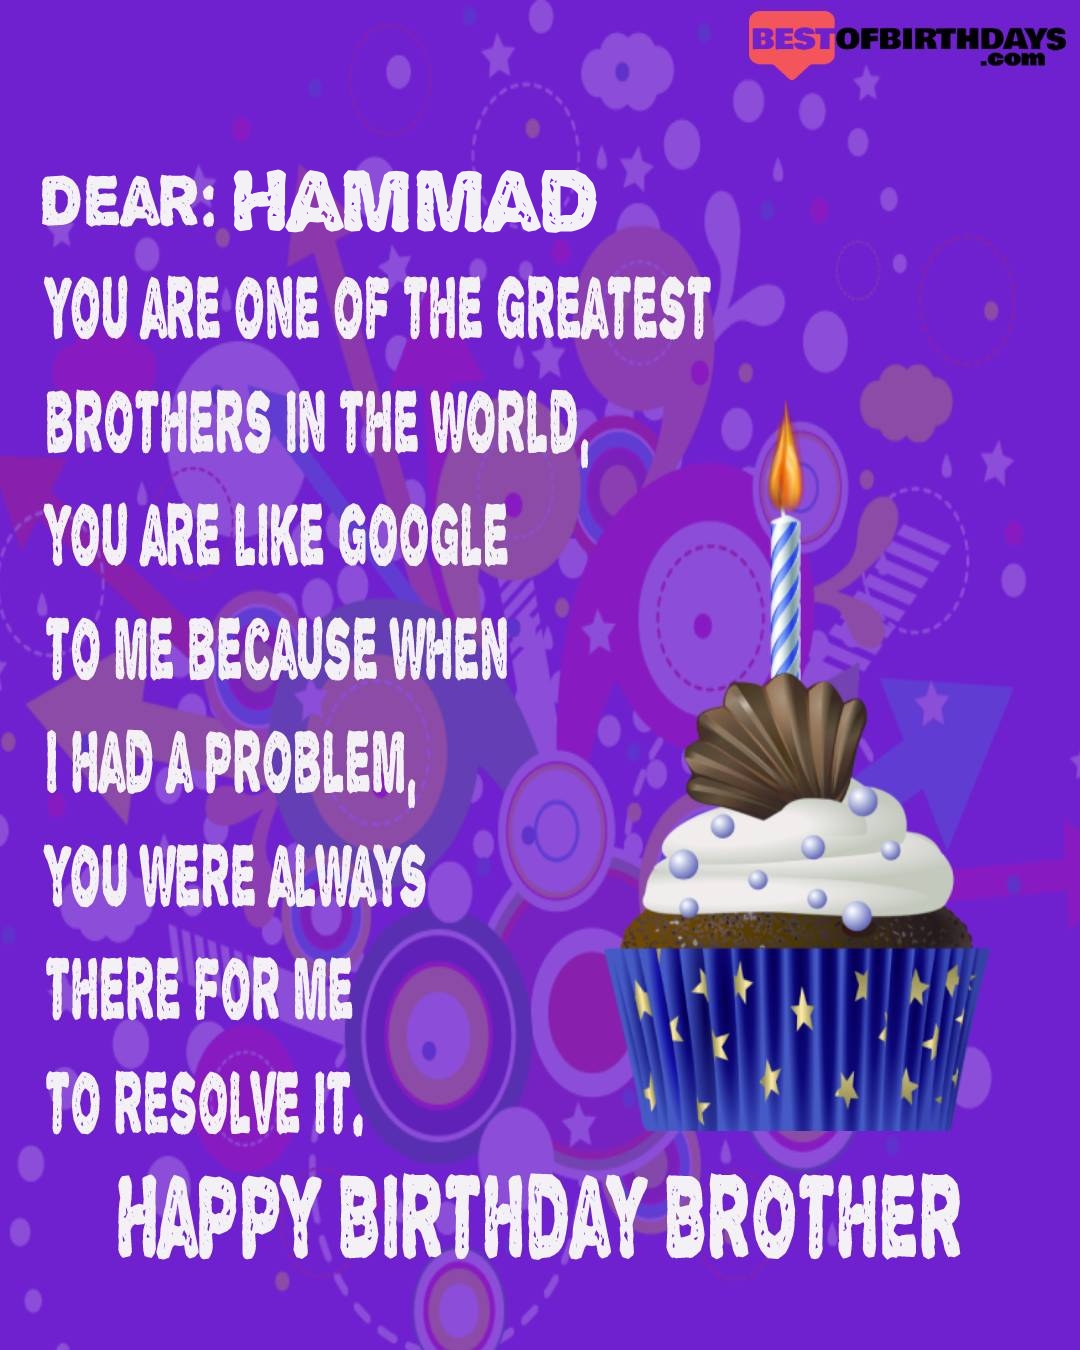 Happy birthday hammad bhai brother bro